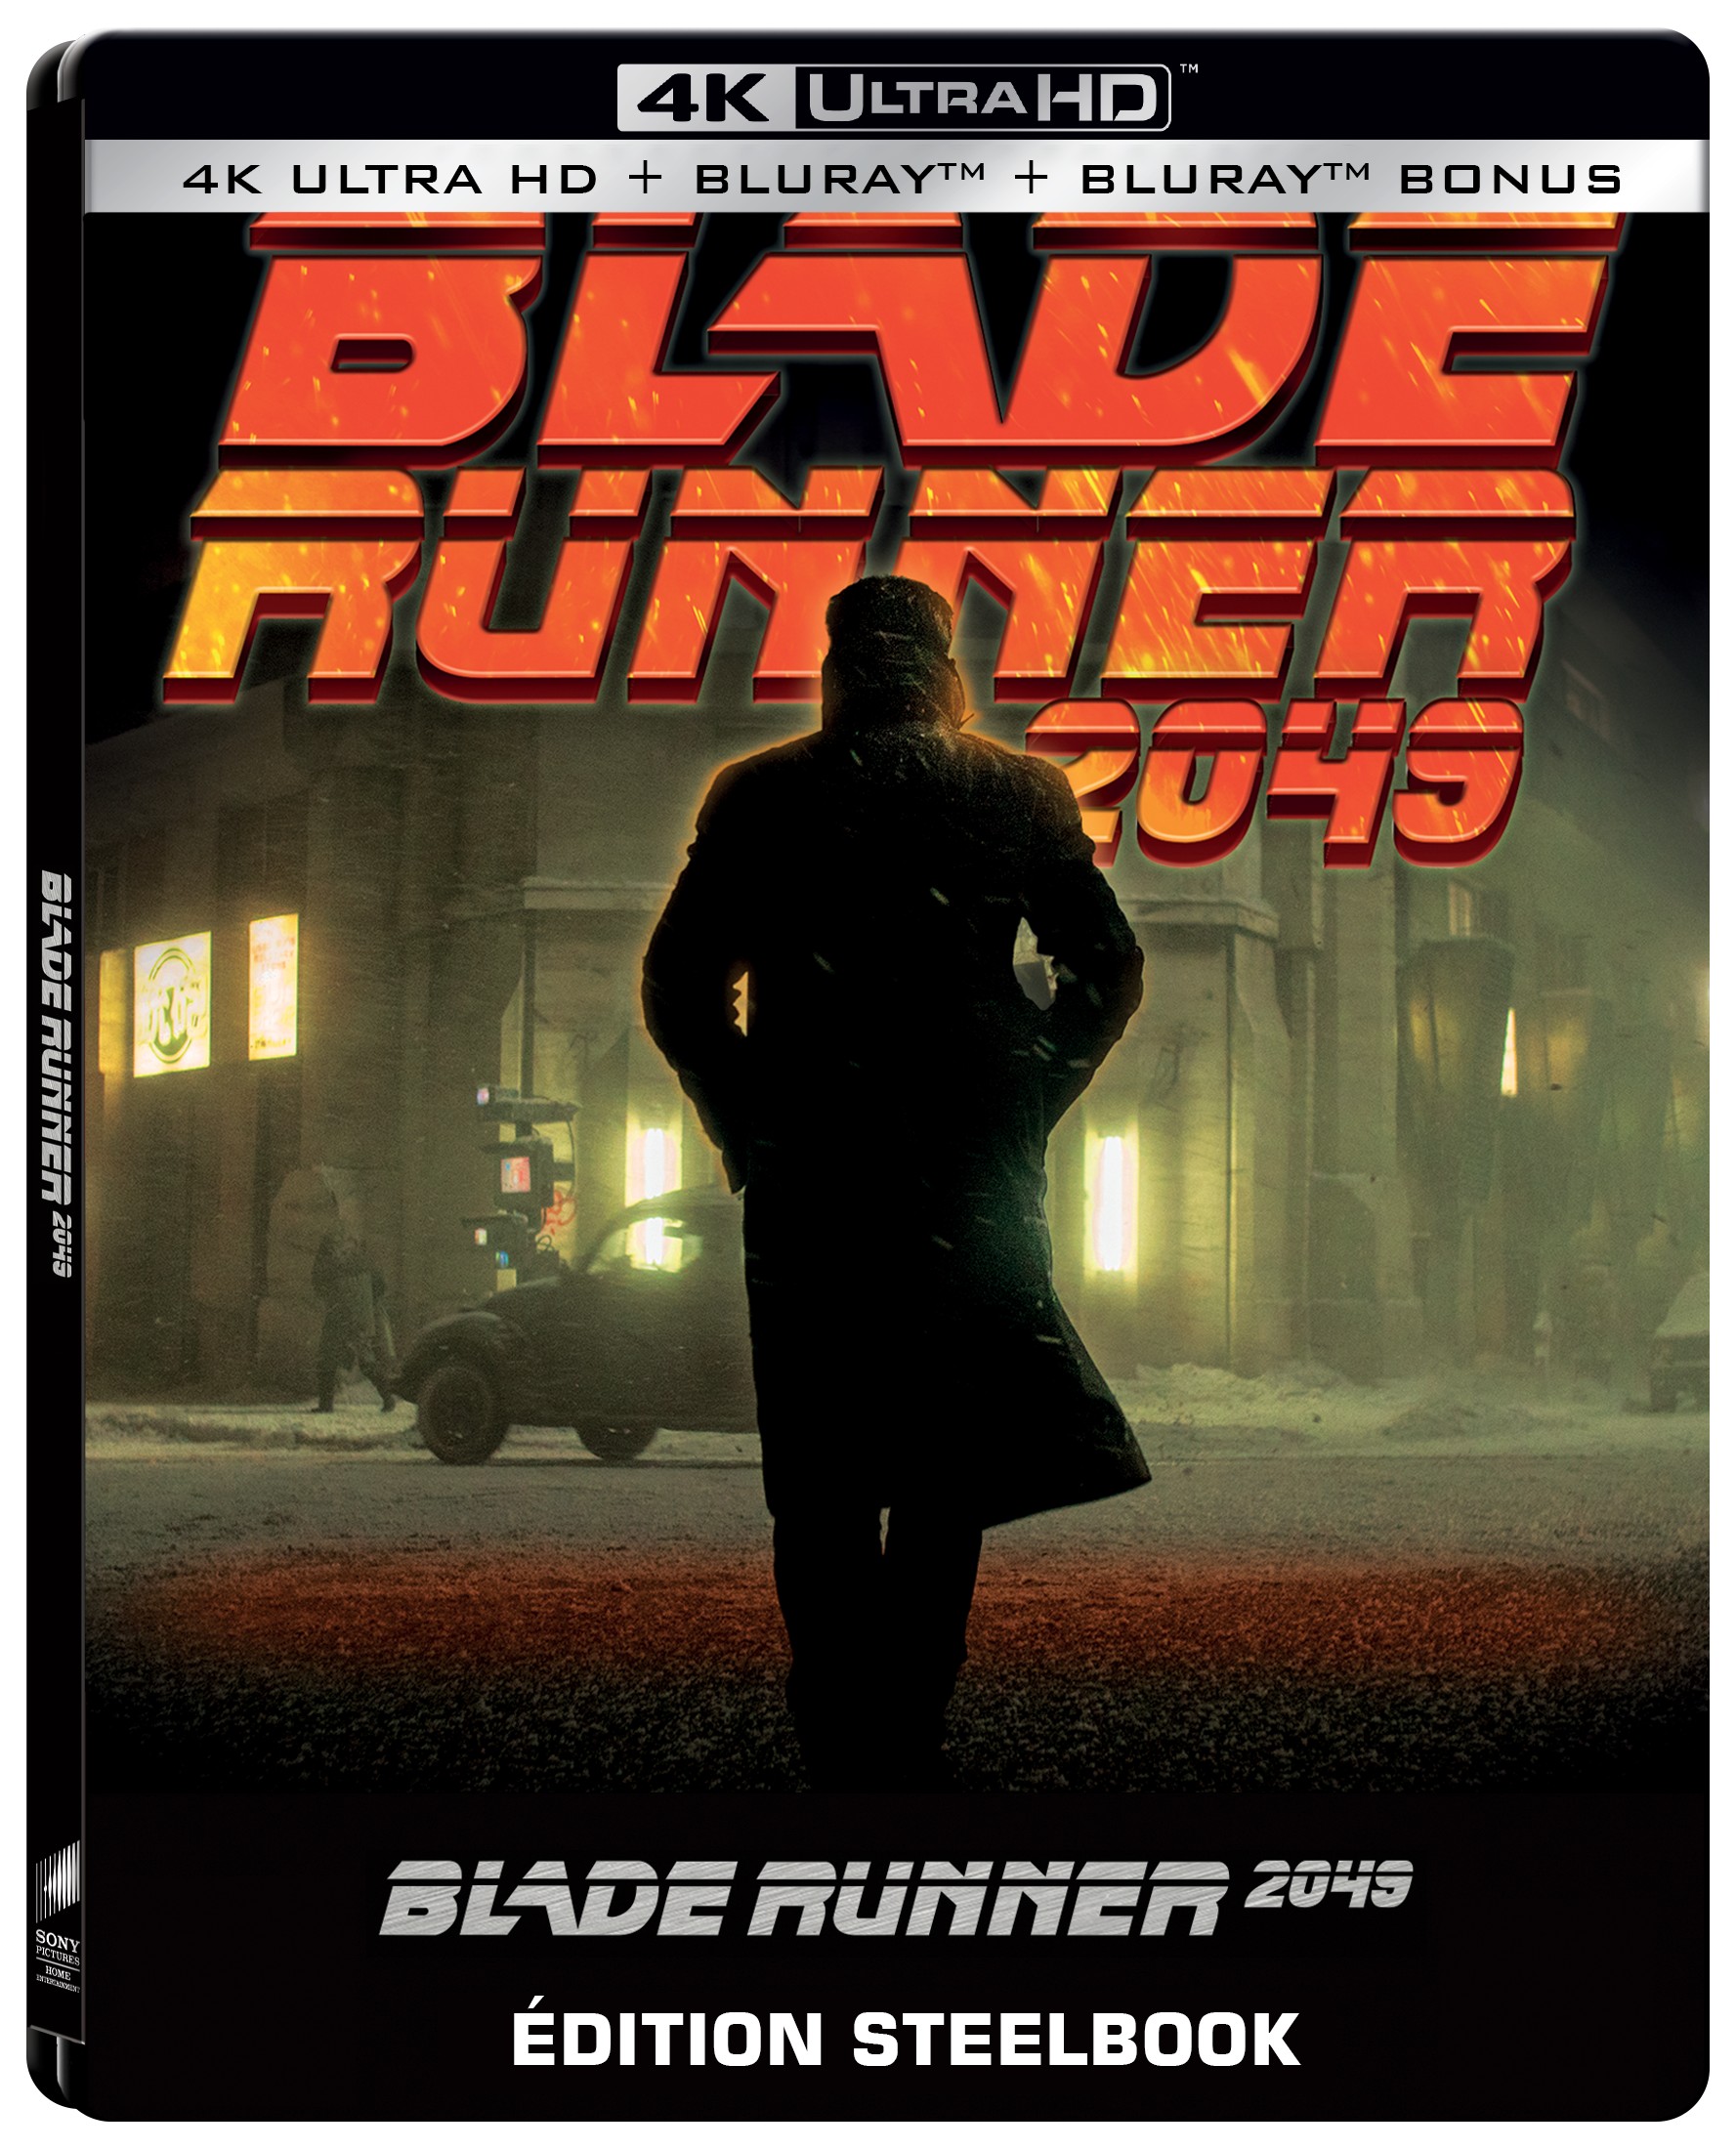 BLADE RUNNER 2049 - COMBO UHD 4K + 2 BD - STEELBOOK EDITION LIMITEE